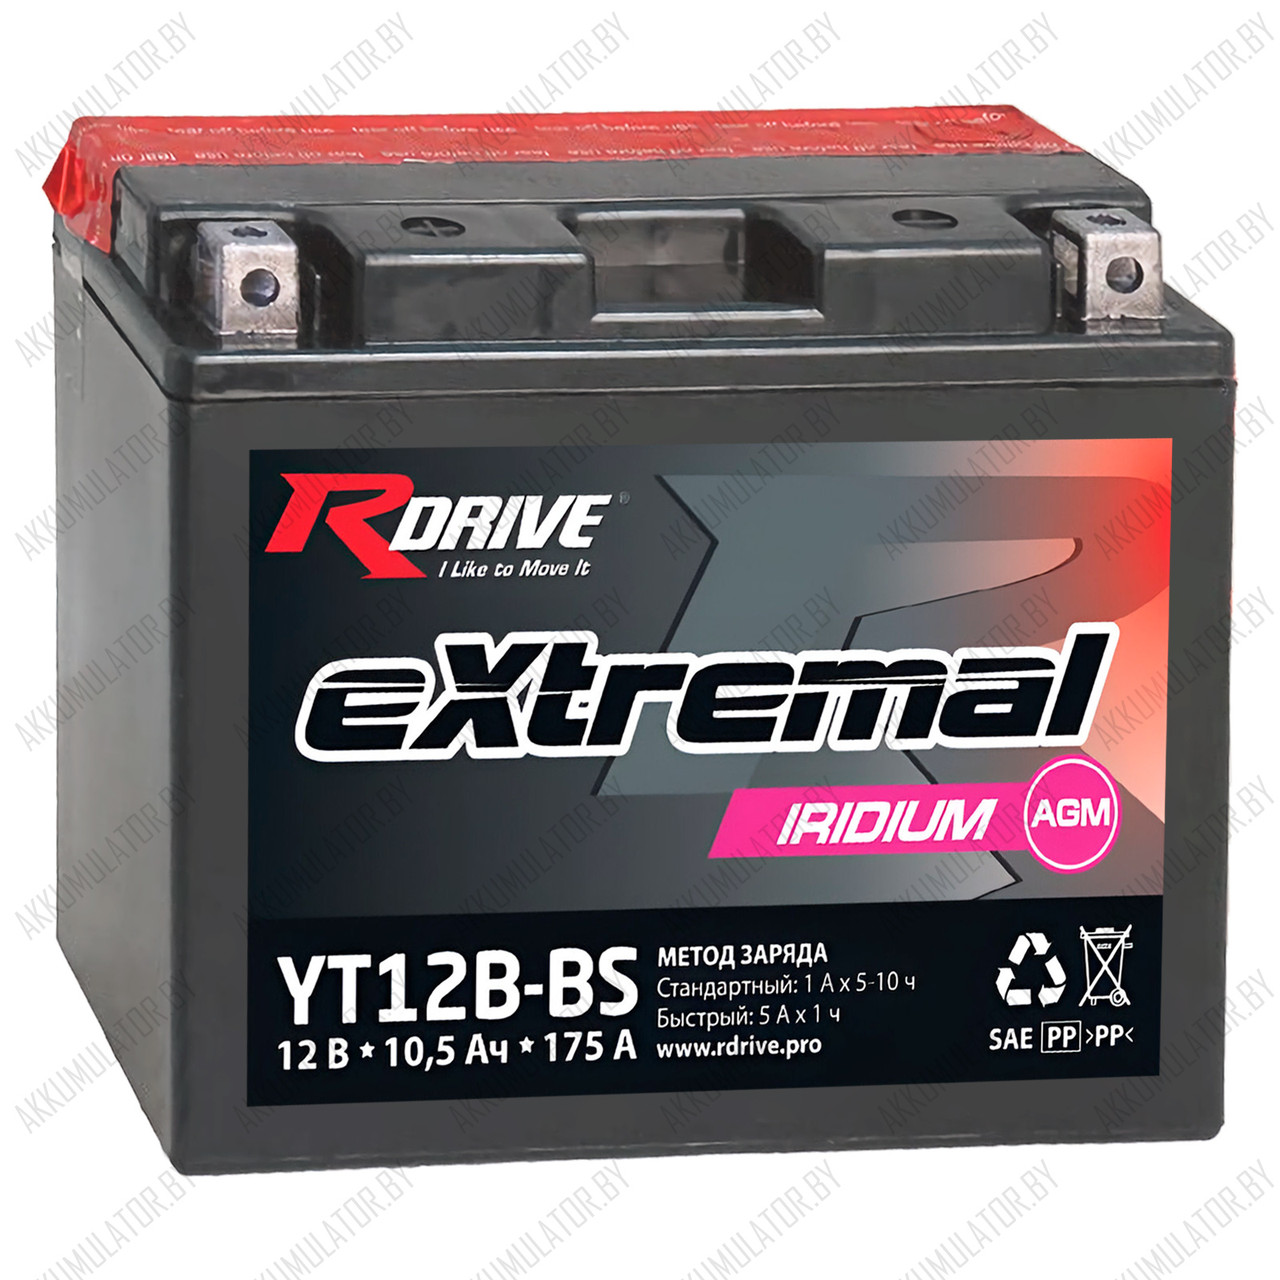 RDrive eXtremal Iridium YT12B-BS / 10,5Ah